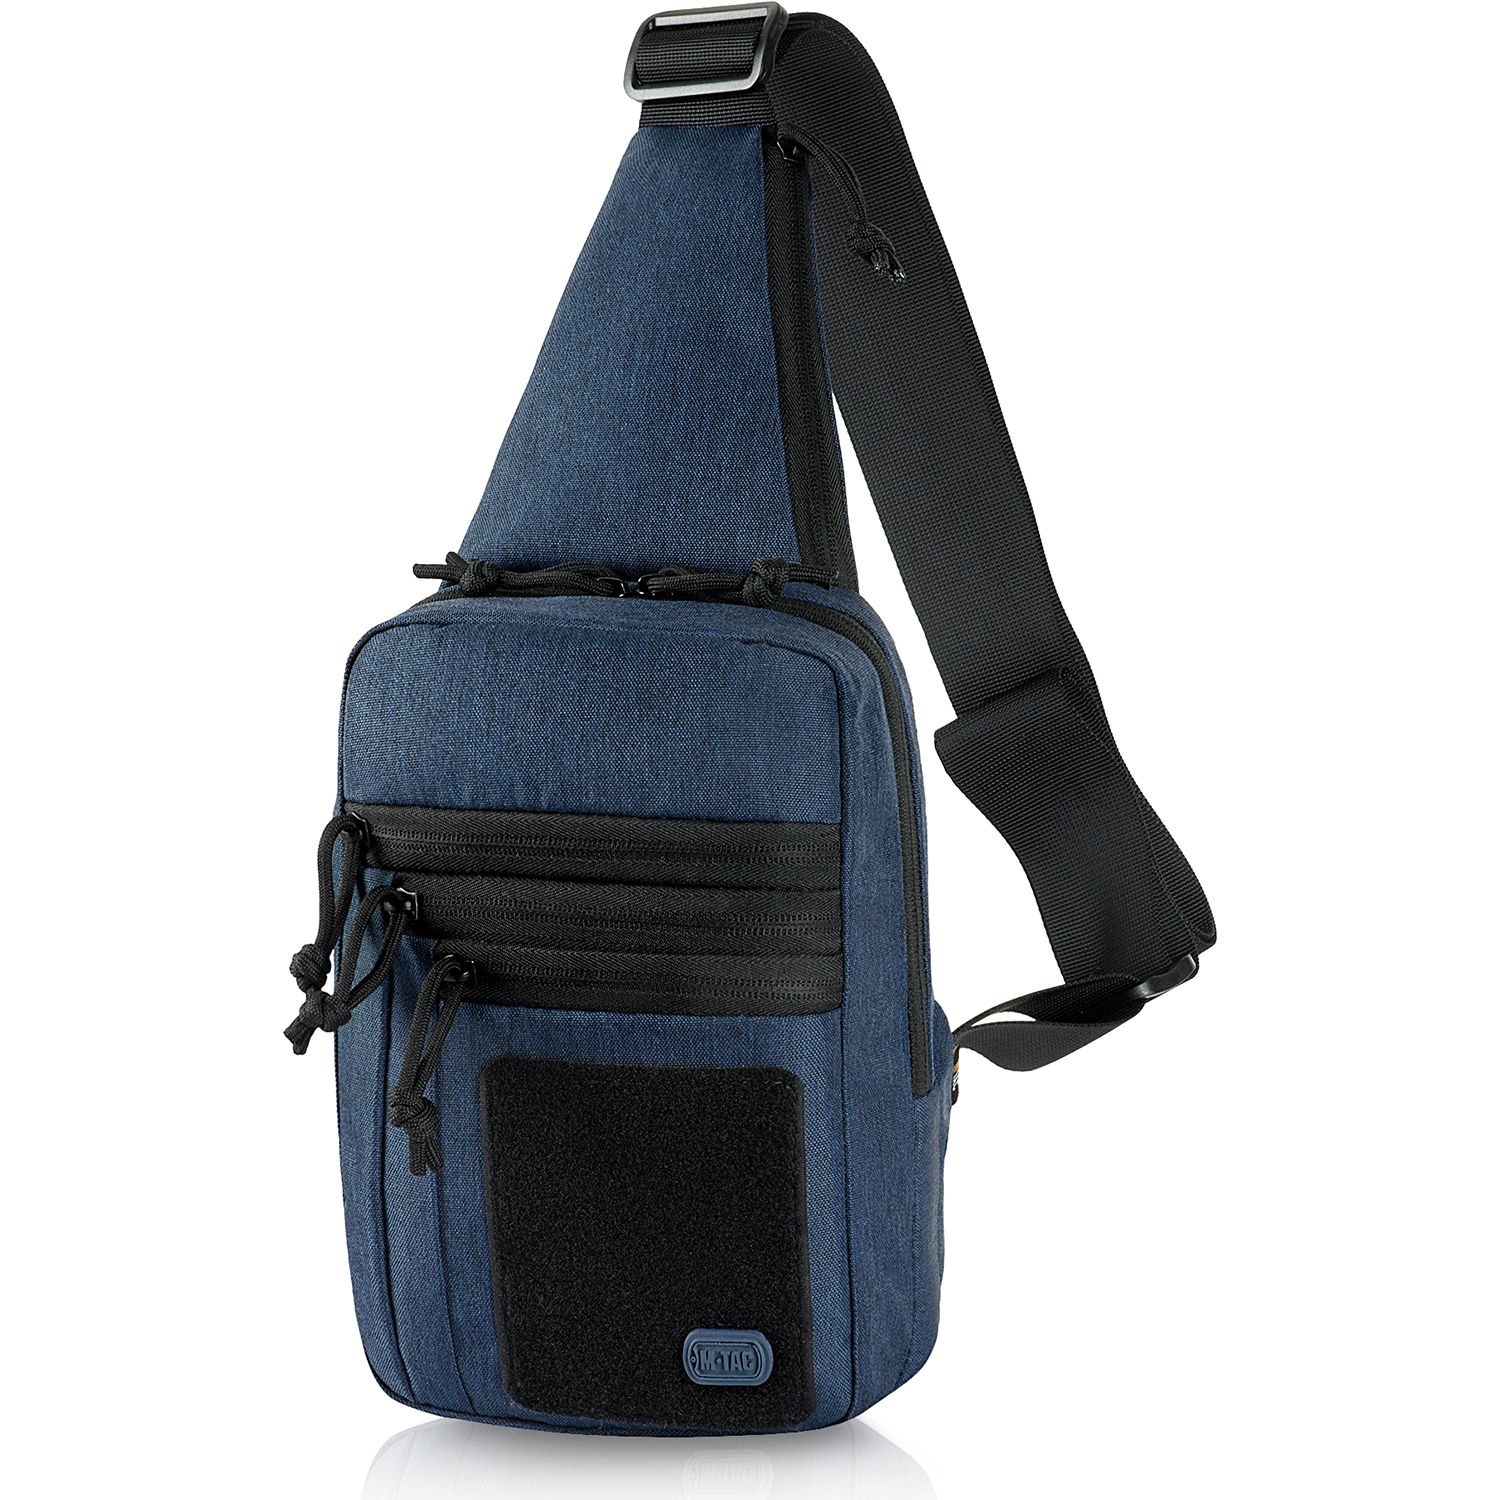 M-Tac Tactical Bag Shoulder Chest Pack with Sling and Loop Panel – M-TAC